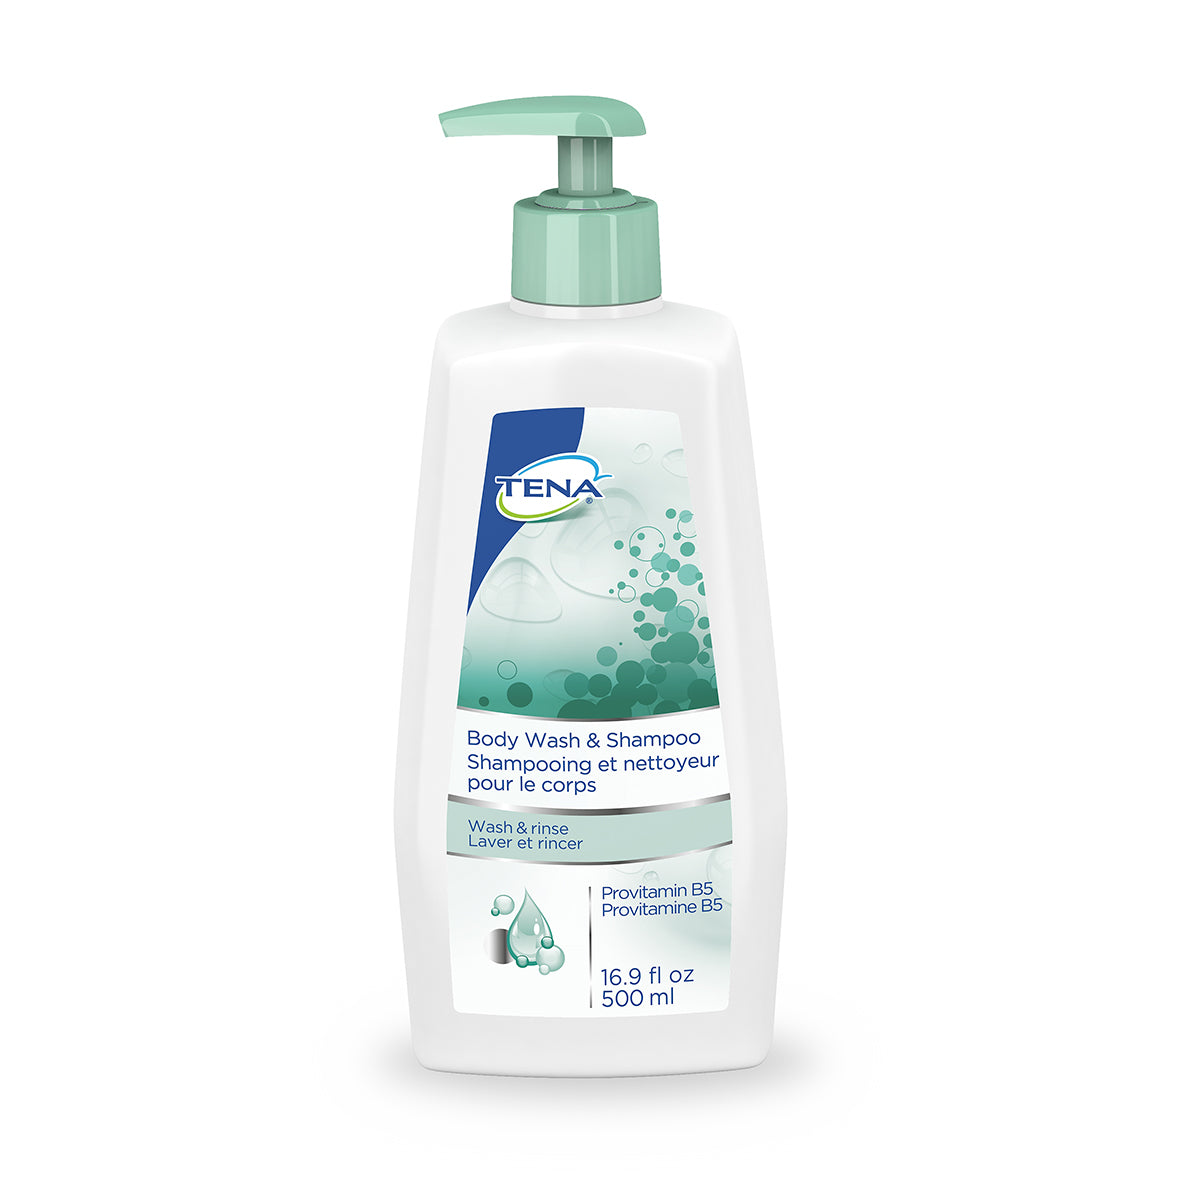 Tena Body Wash & Shampoo Scent-Free 1000ml